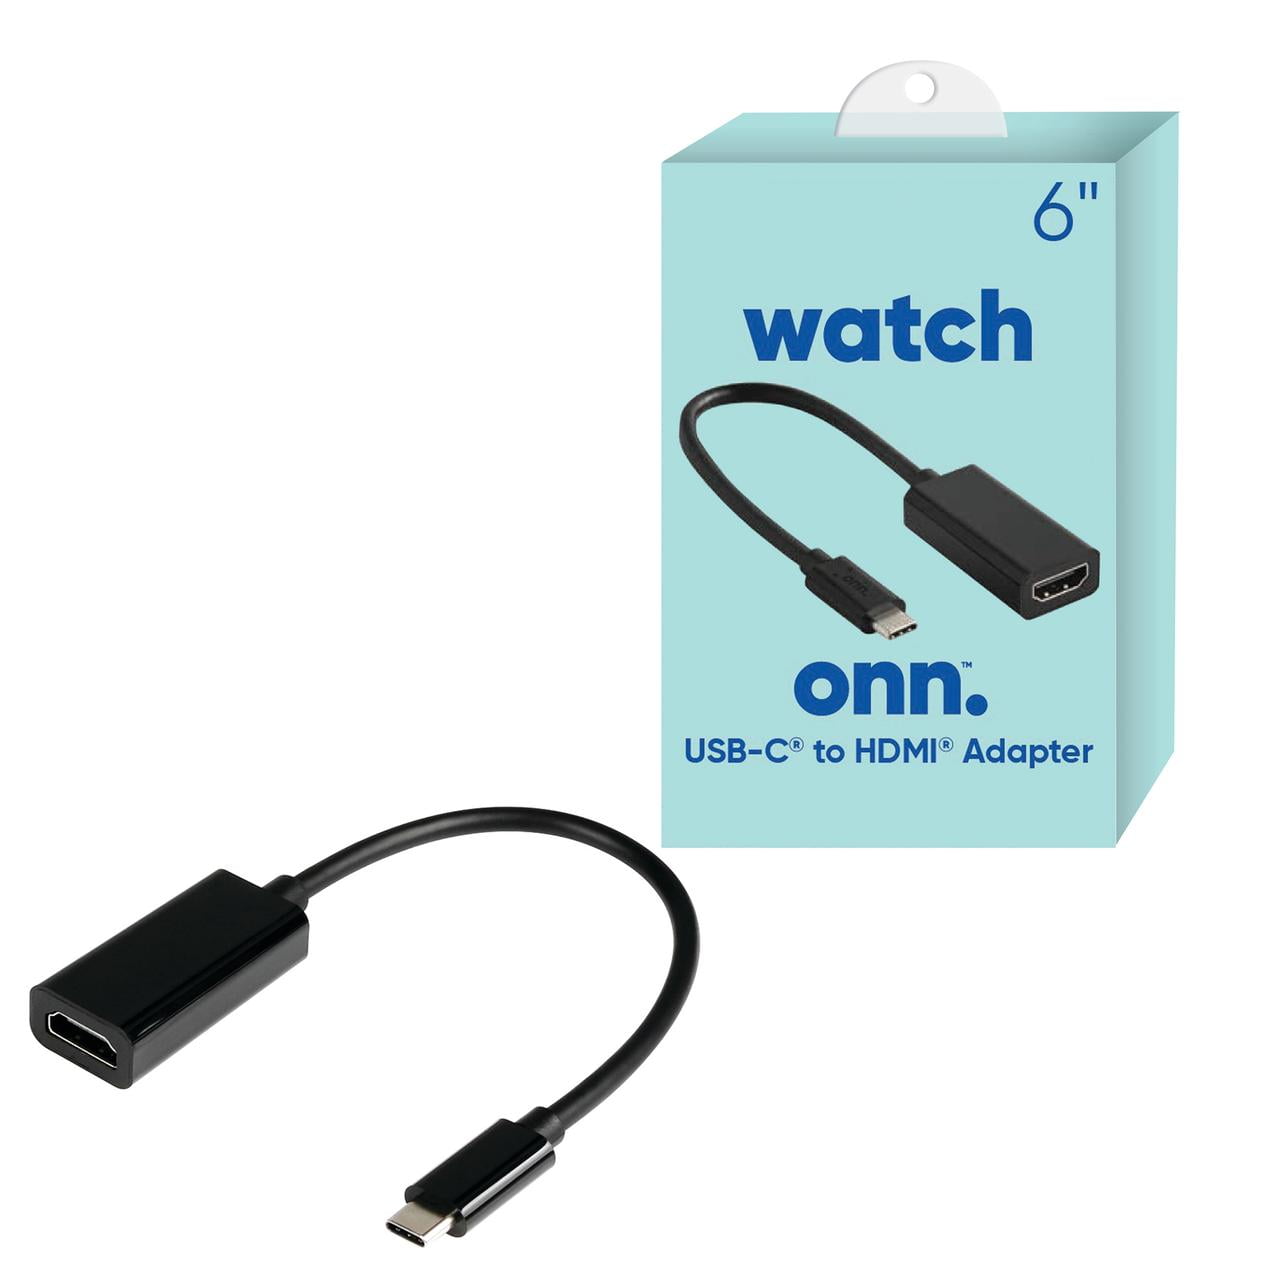 onn. USB-C to HDMI Black - Walmart.com